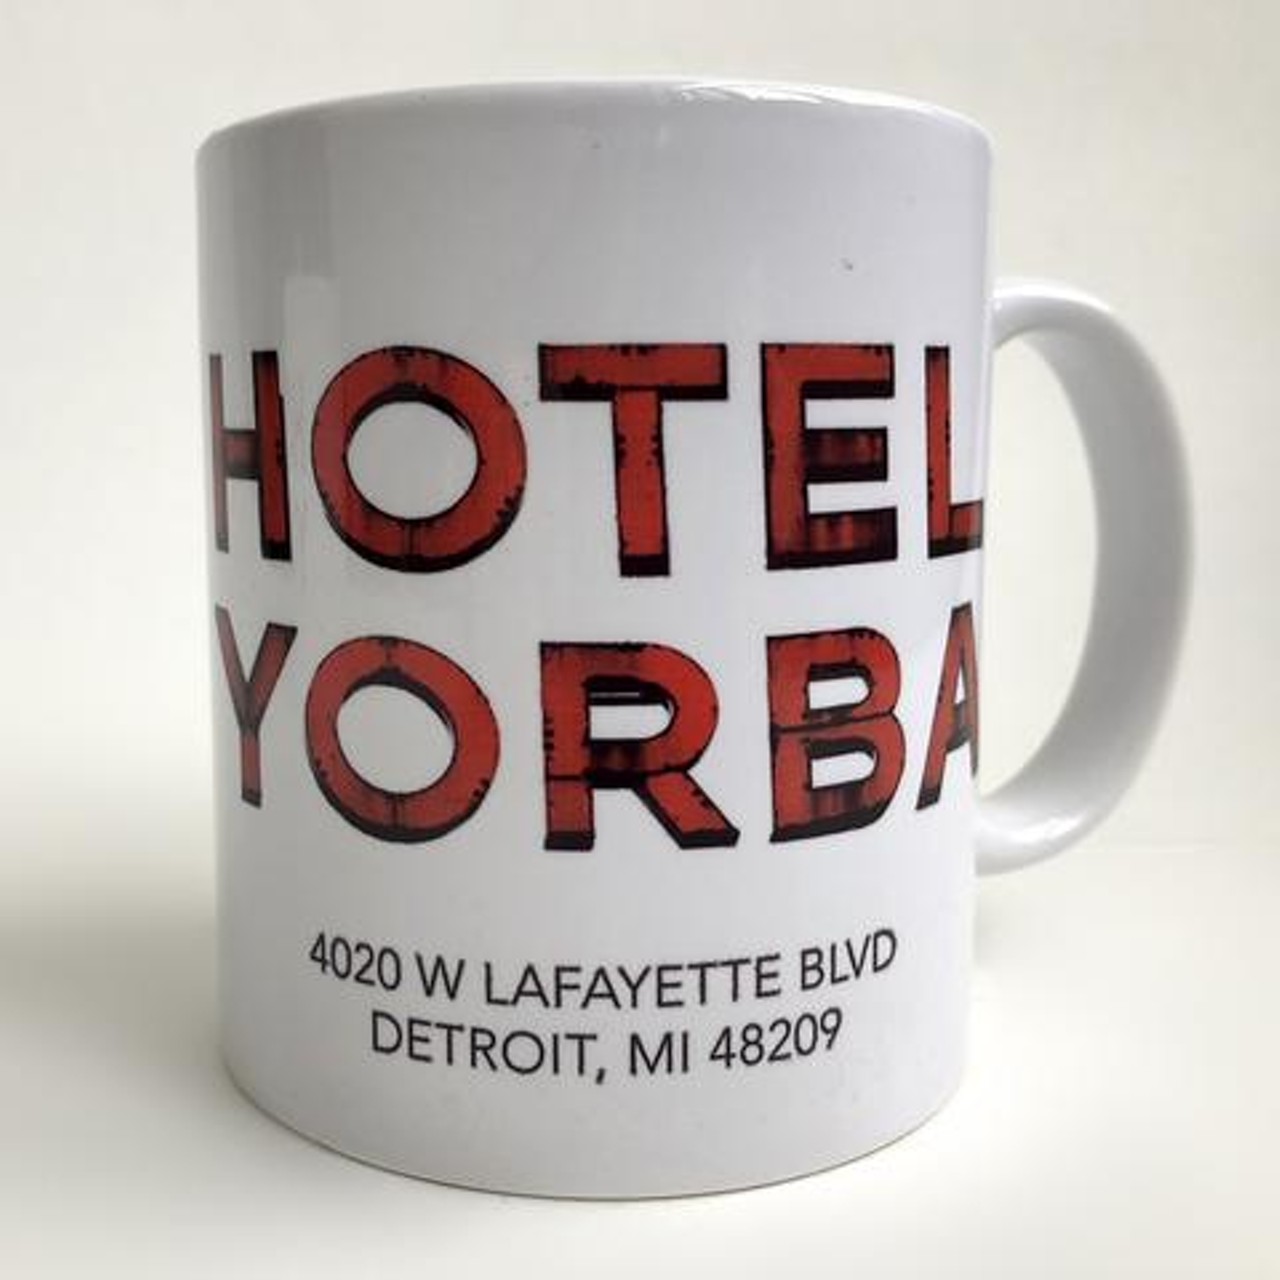 Hotel Yorba coffee mug, $12.